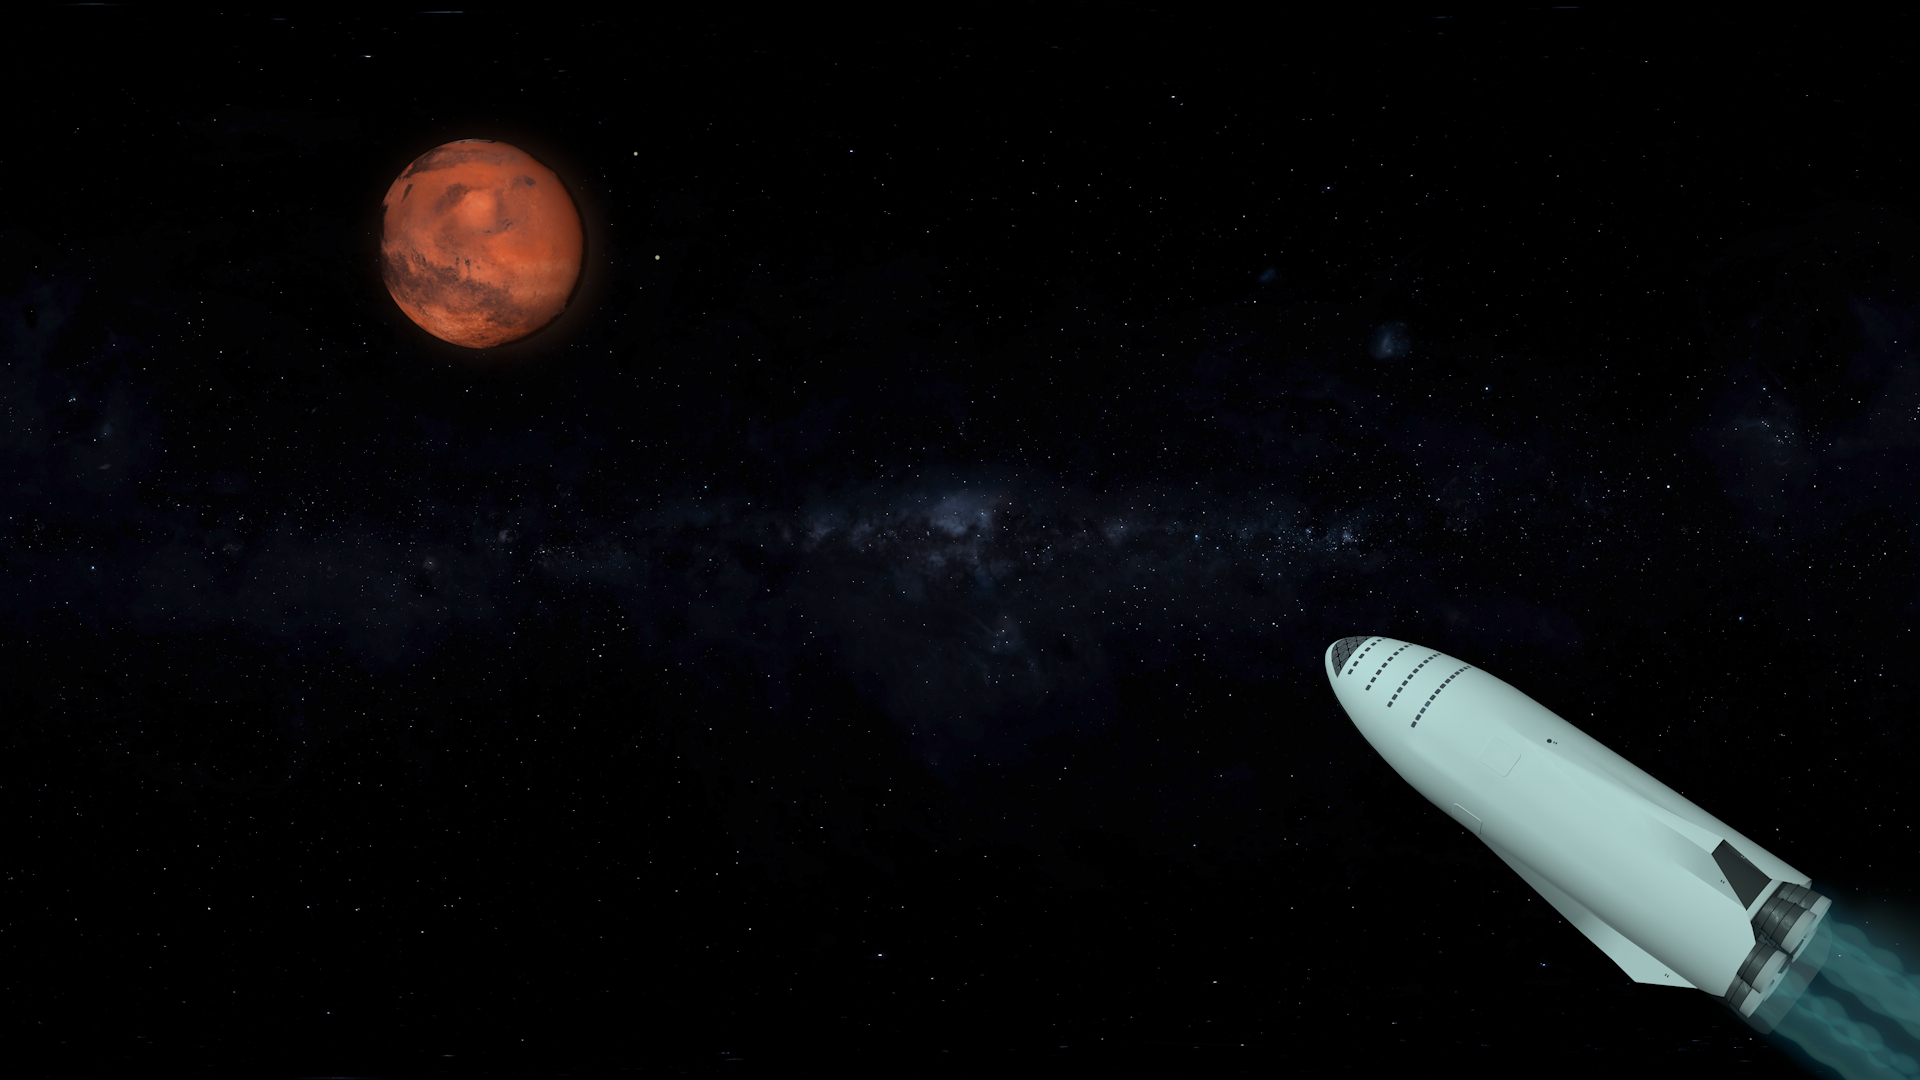 SpaceX Big Falcon Rocket in Cinema 4d maxwell render image